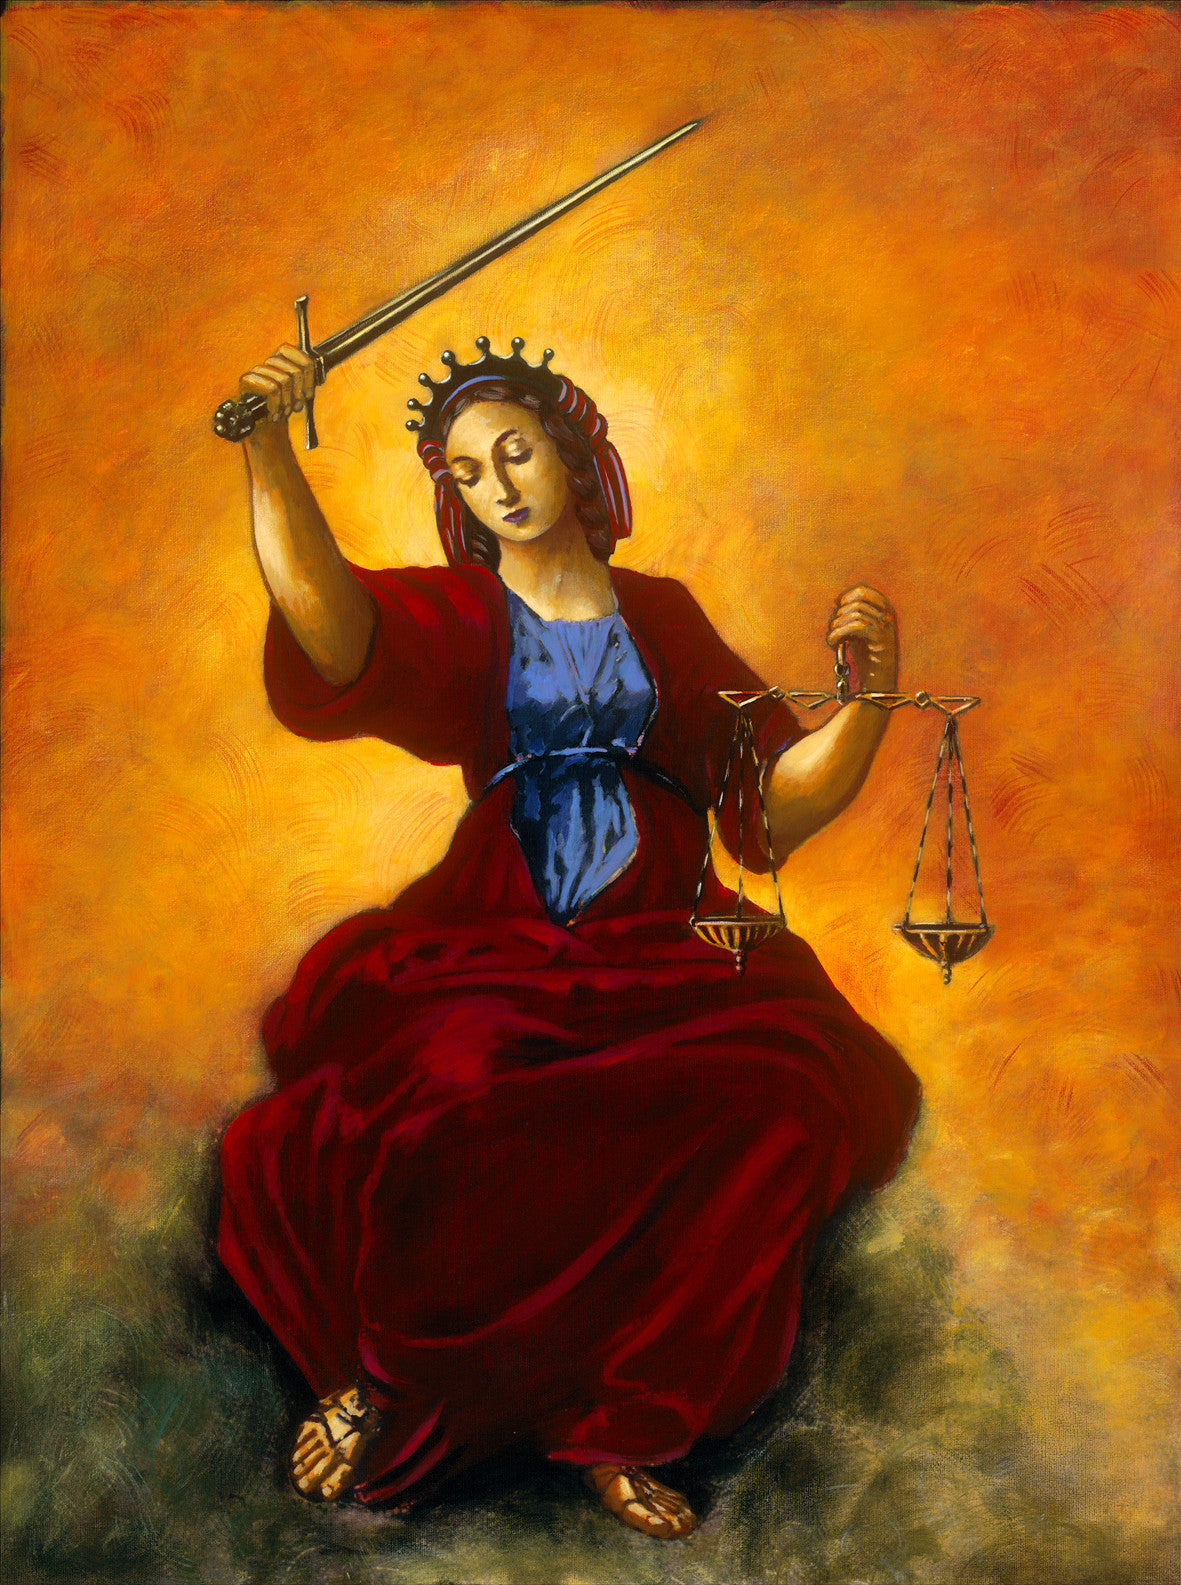 Classic Rennaissance image of justice after Raphael. by artist Trevor Goring